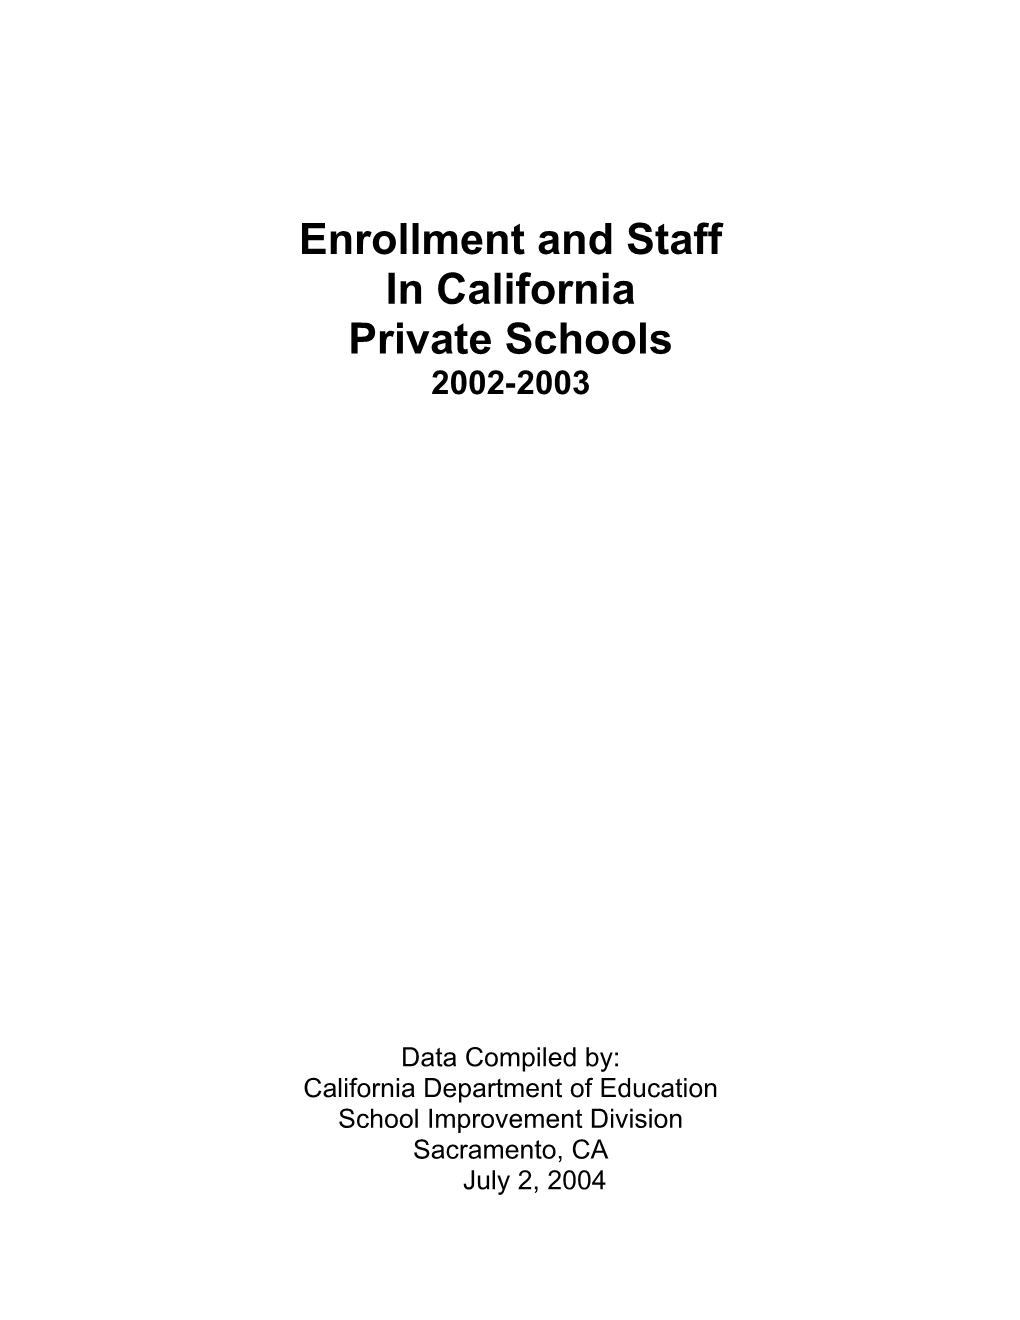 Enrollment & Staff in CA Private Schls 2002-03 - Private Schools (CA Dept of Education)